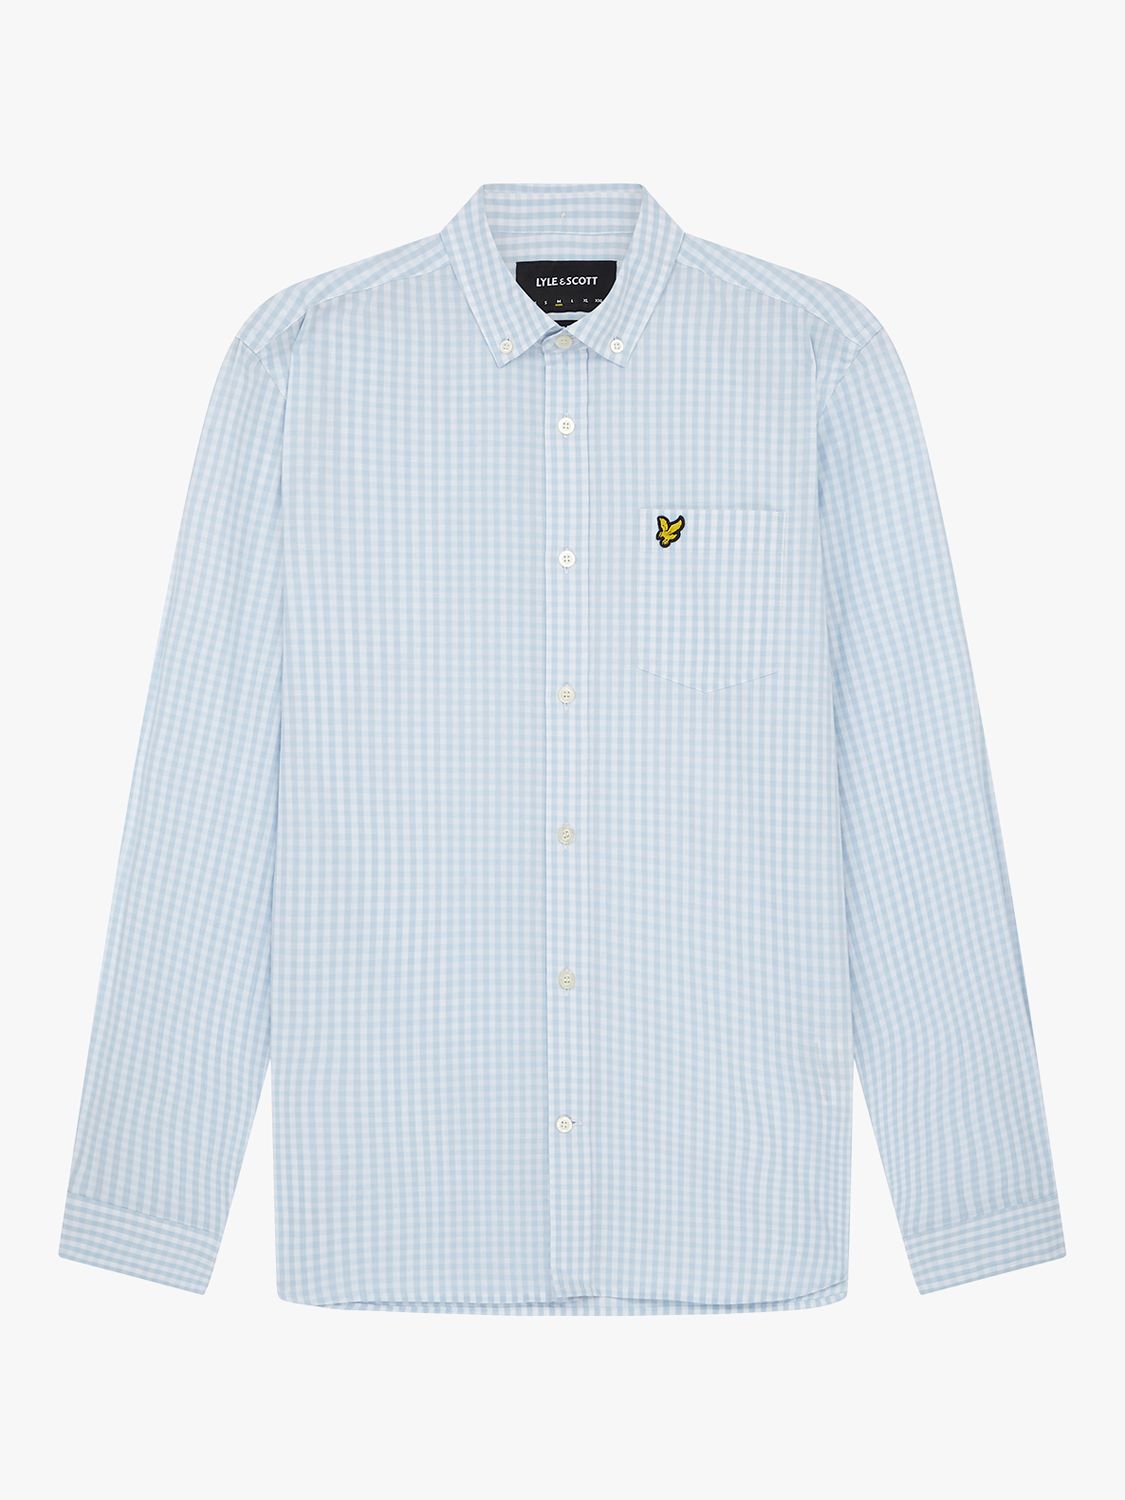 Lyle & Scott Long Sleeve Slim Fit Gingham Shirt, Blue/White, XS